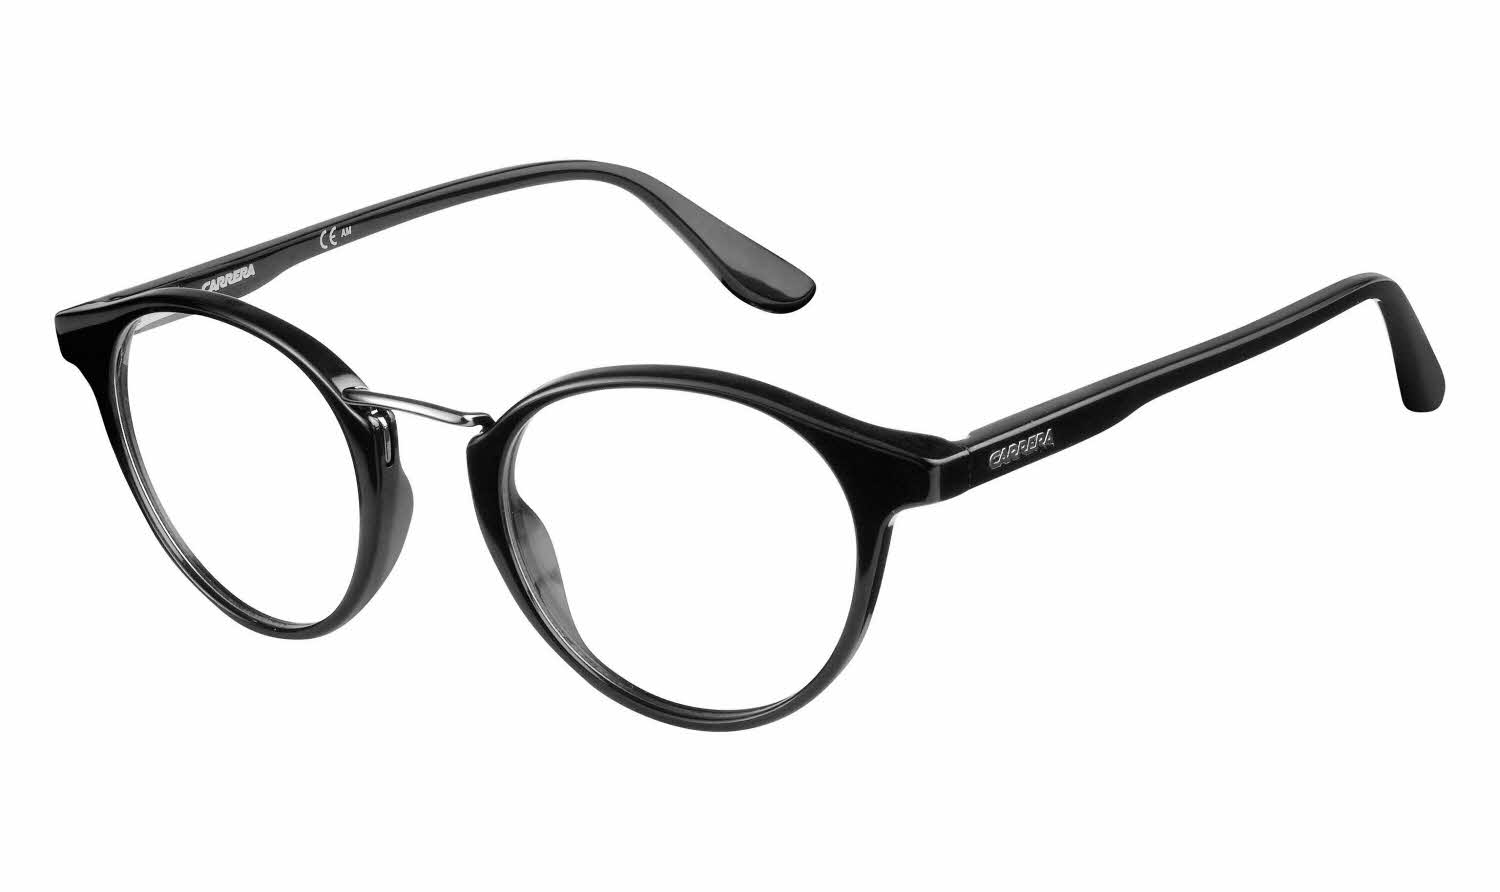 Carrera Prescription Eyewear Frame